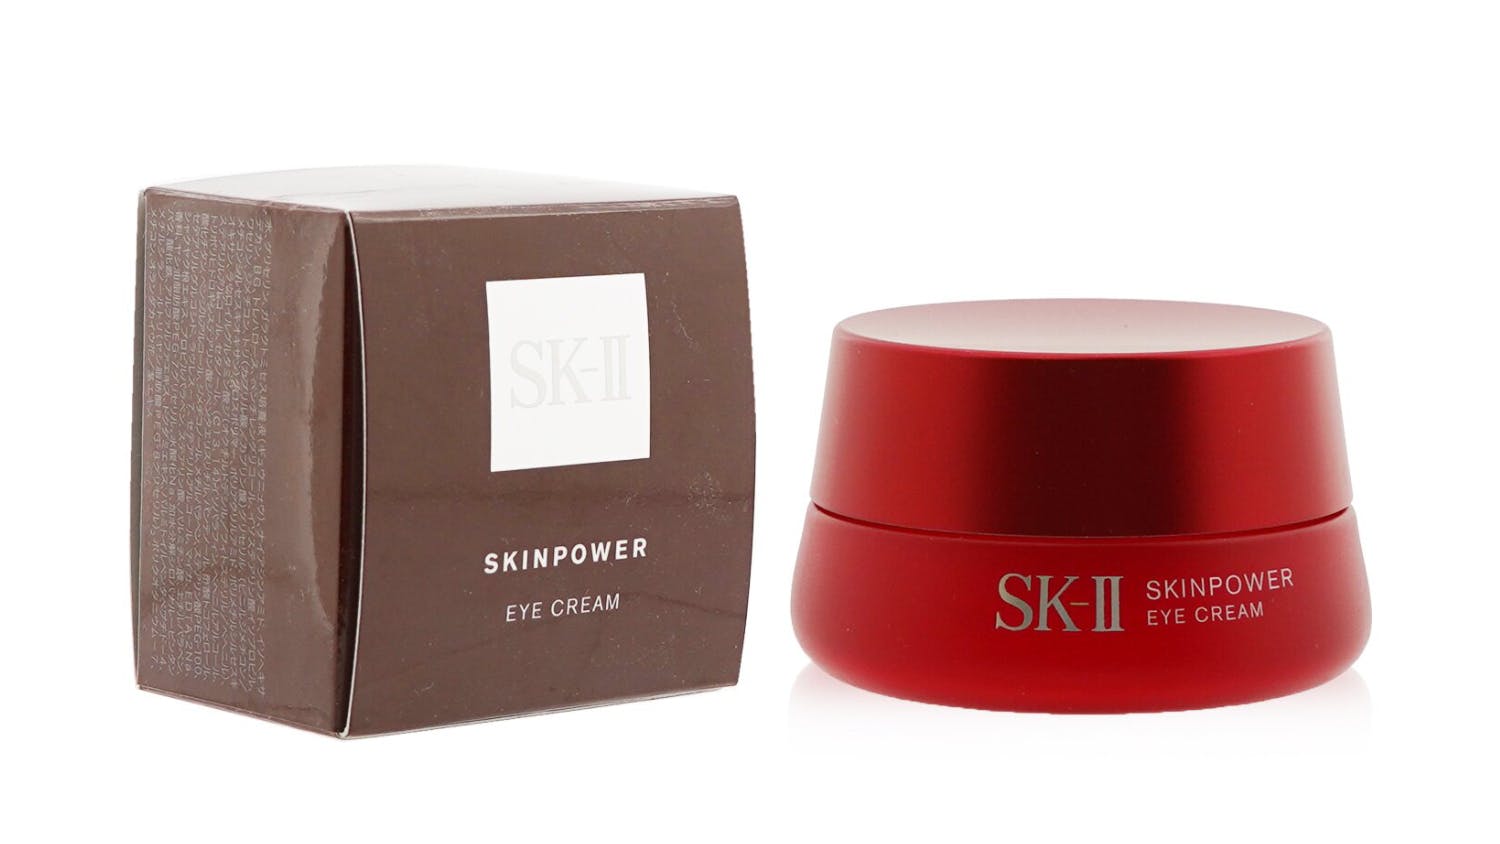 SK II Skinpower Eye Cream - 15g/0.5oz"